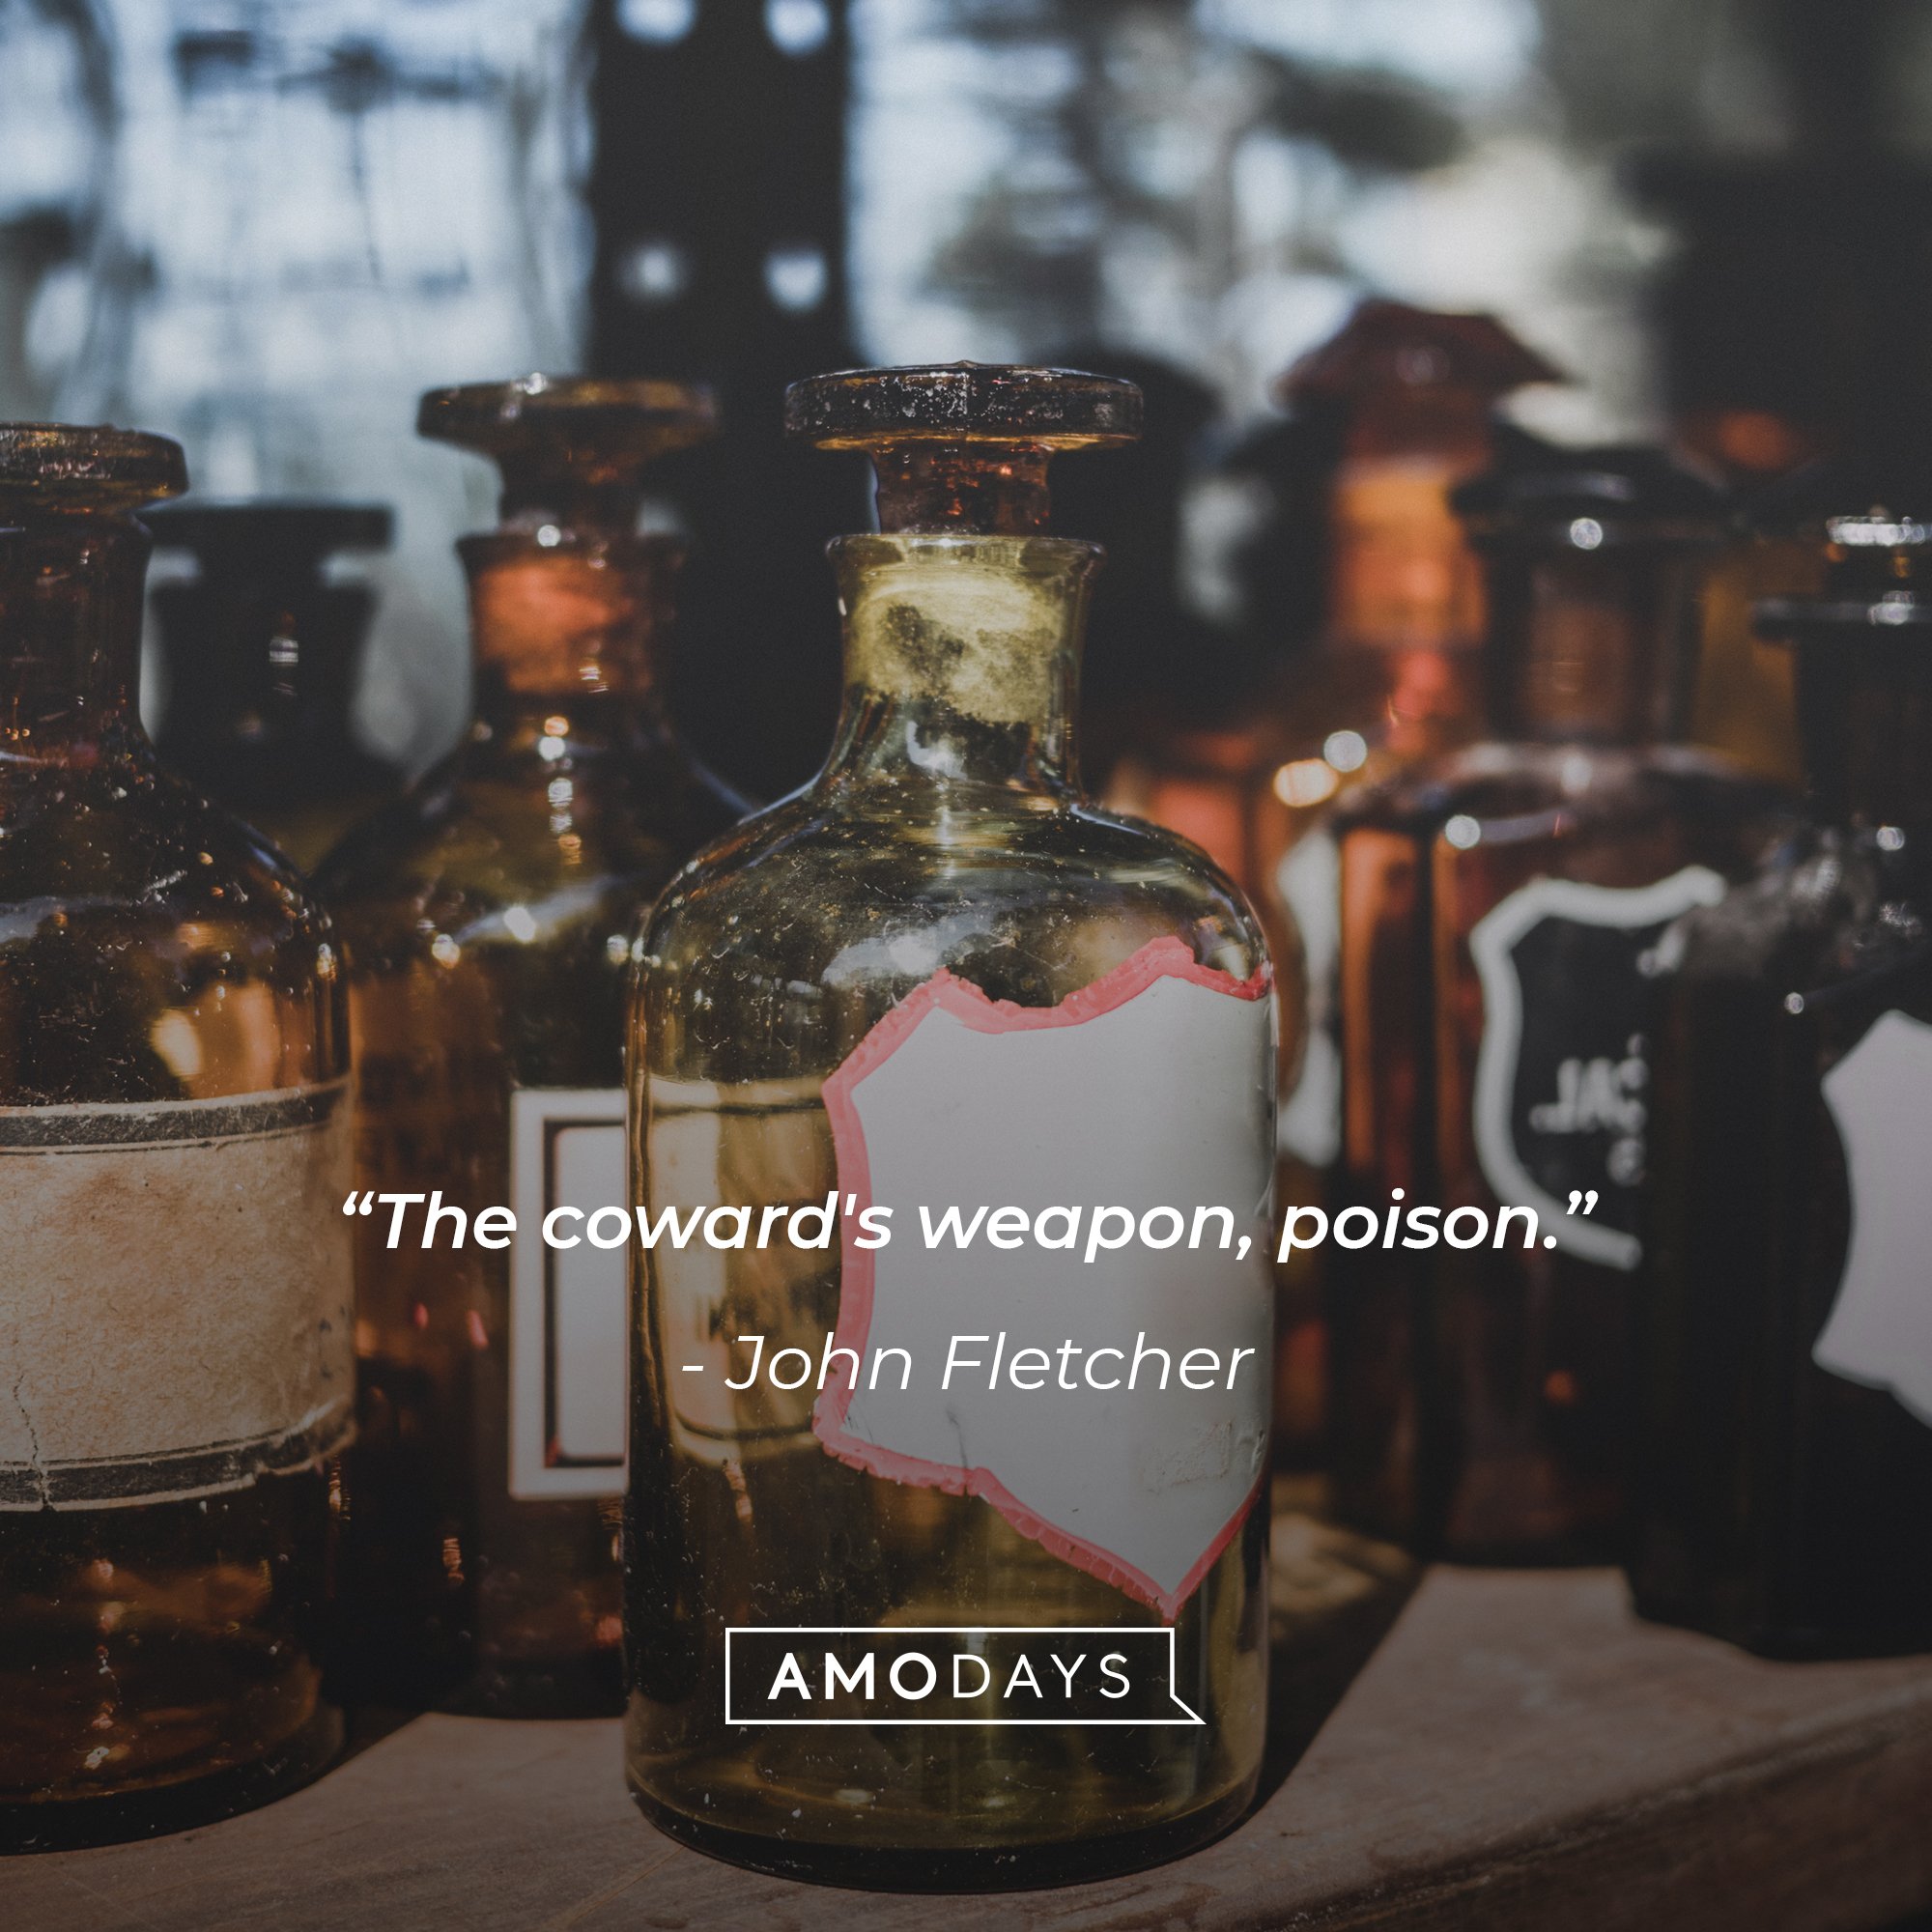 John Fletcher’s quote: "The coward's weapon, poison." | Image: AmoDays